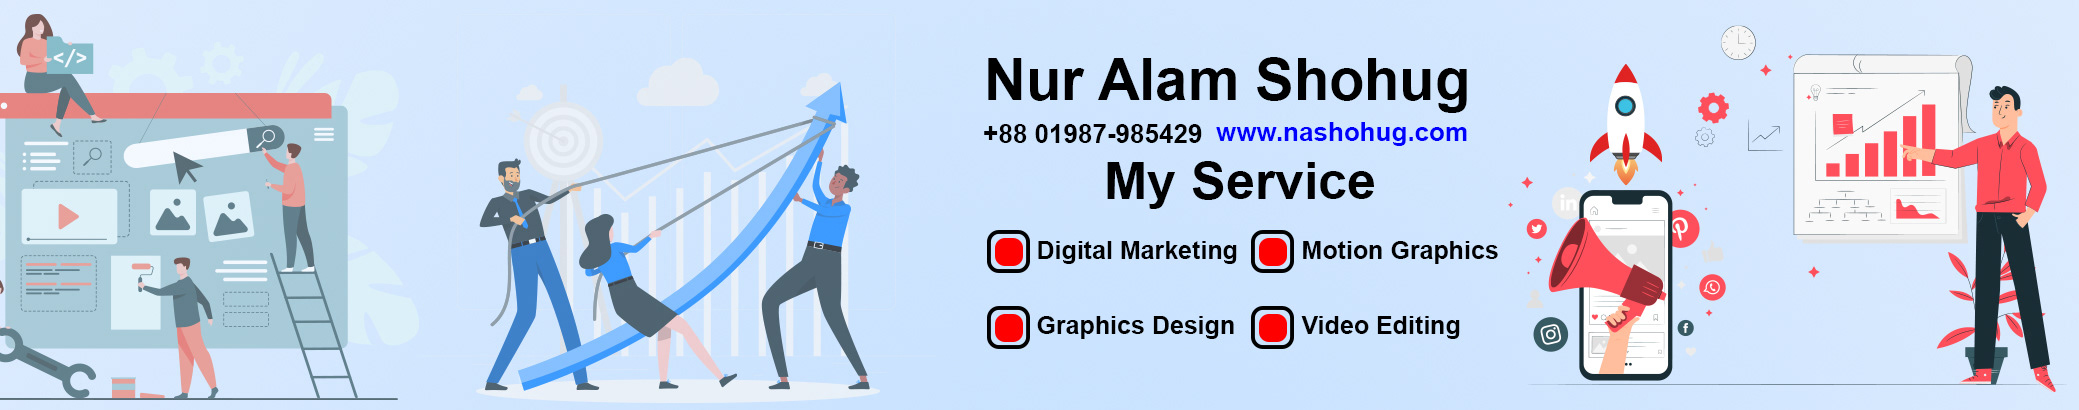 Nur Alam Shohug's profile banner